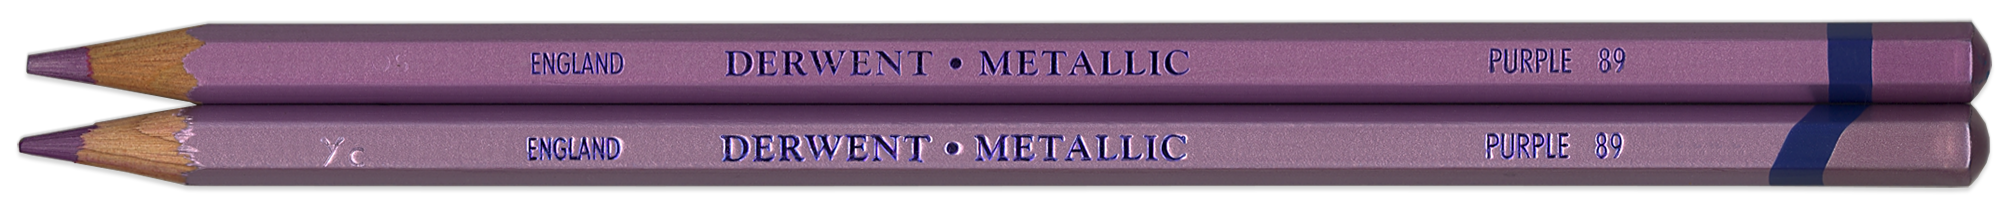 metallic_purple_89